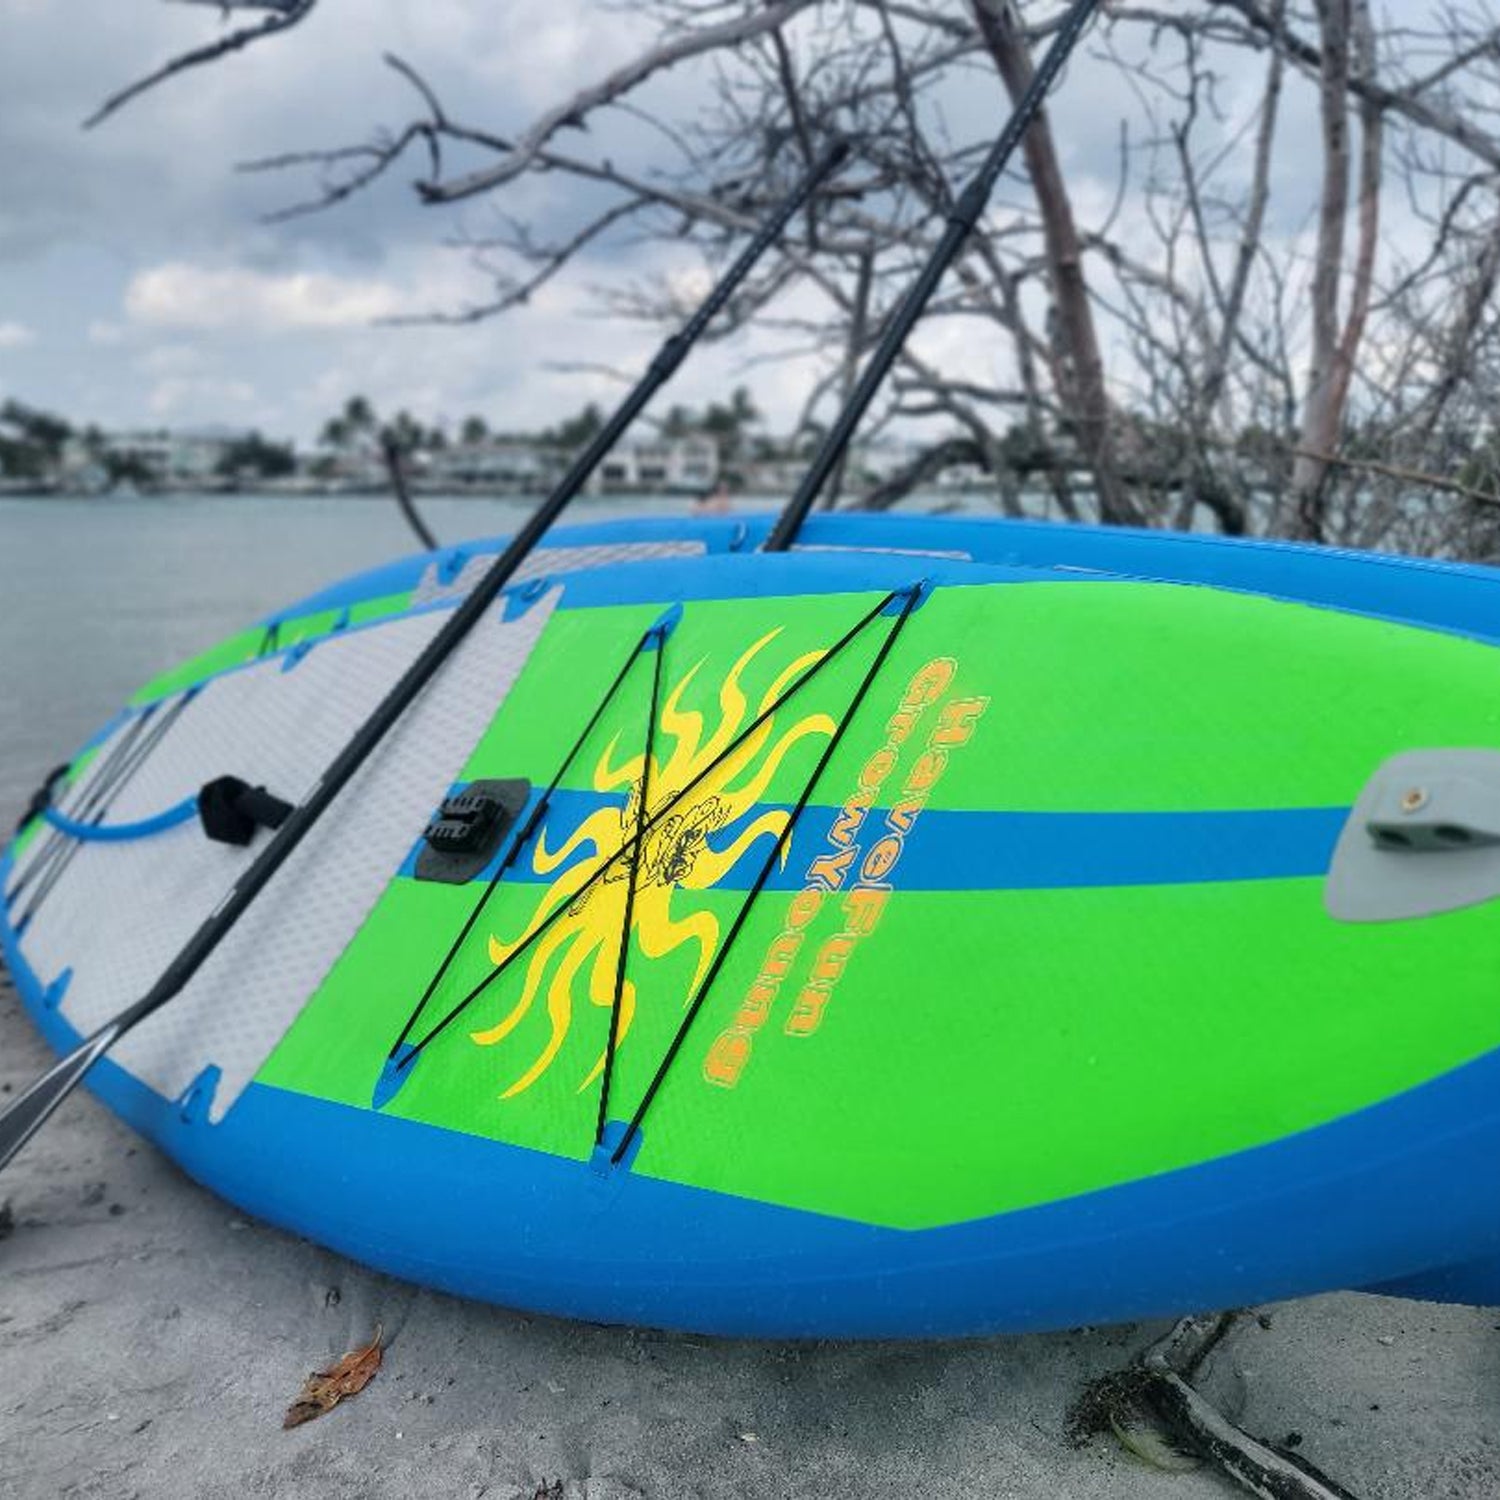 Morsel Munk HFGY Inflatable Paddleboard on beach of Jupiter Island